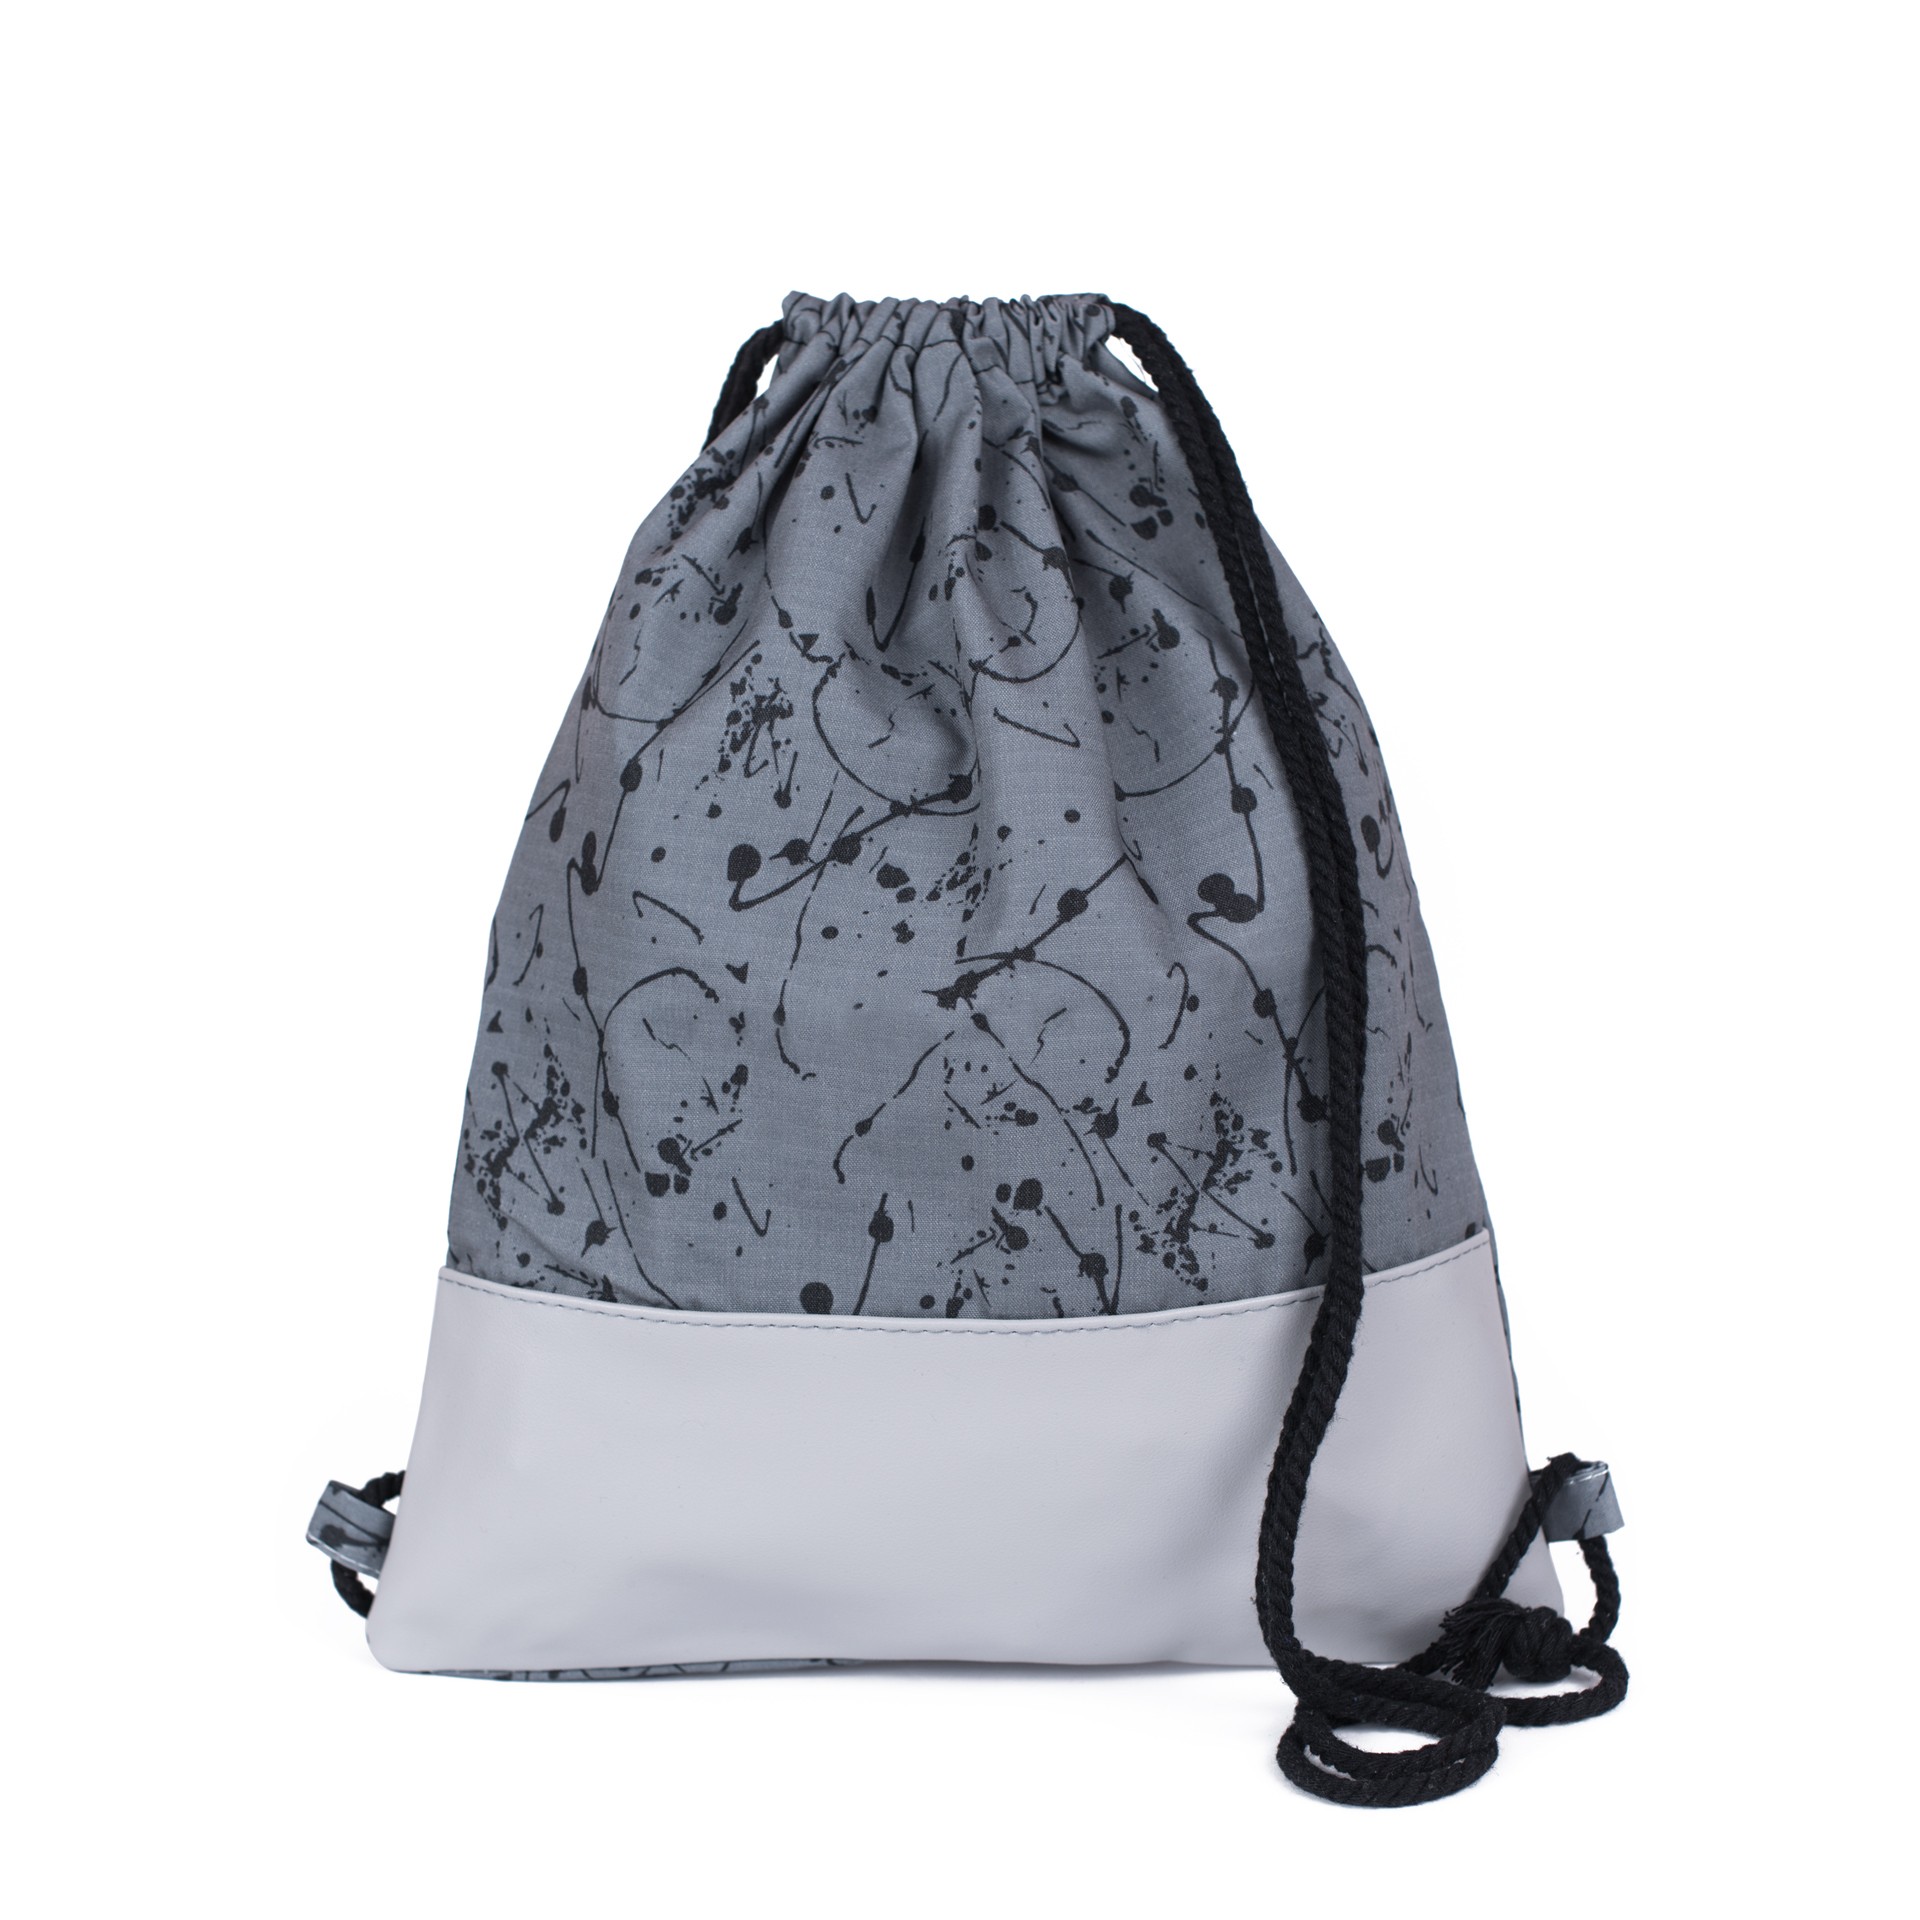 Art Of Polo Unisex's Backpack Tr18178